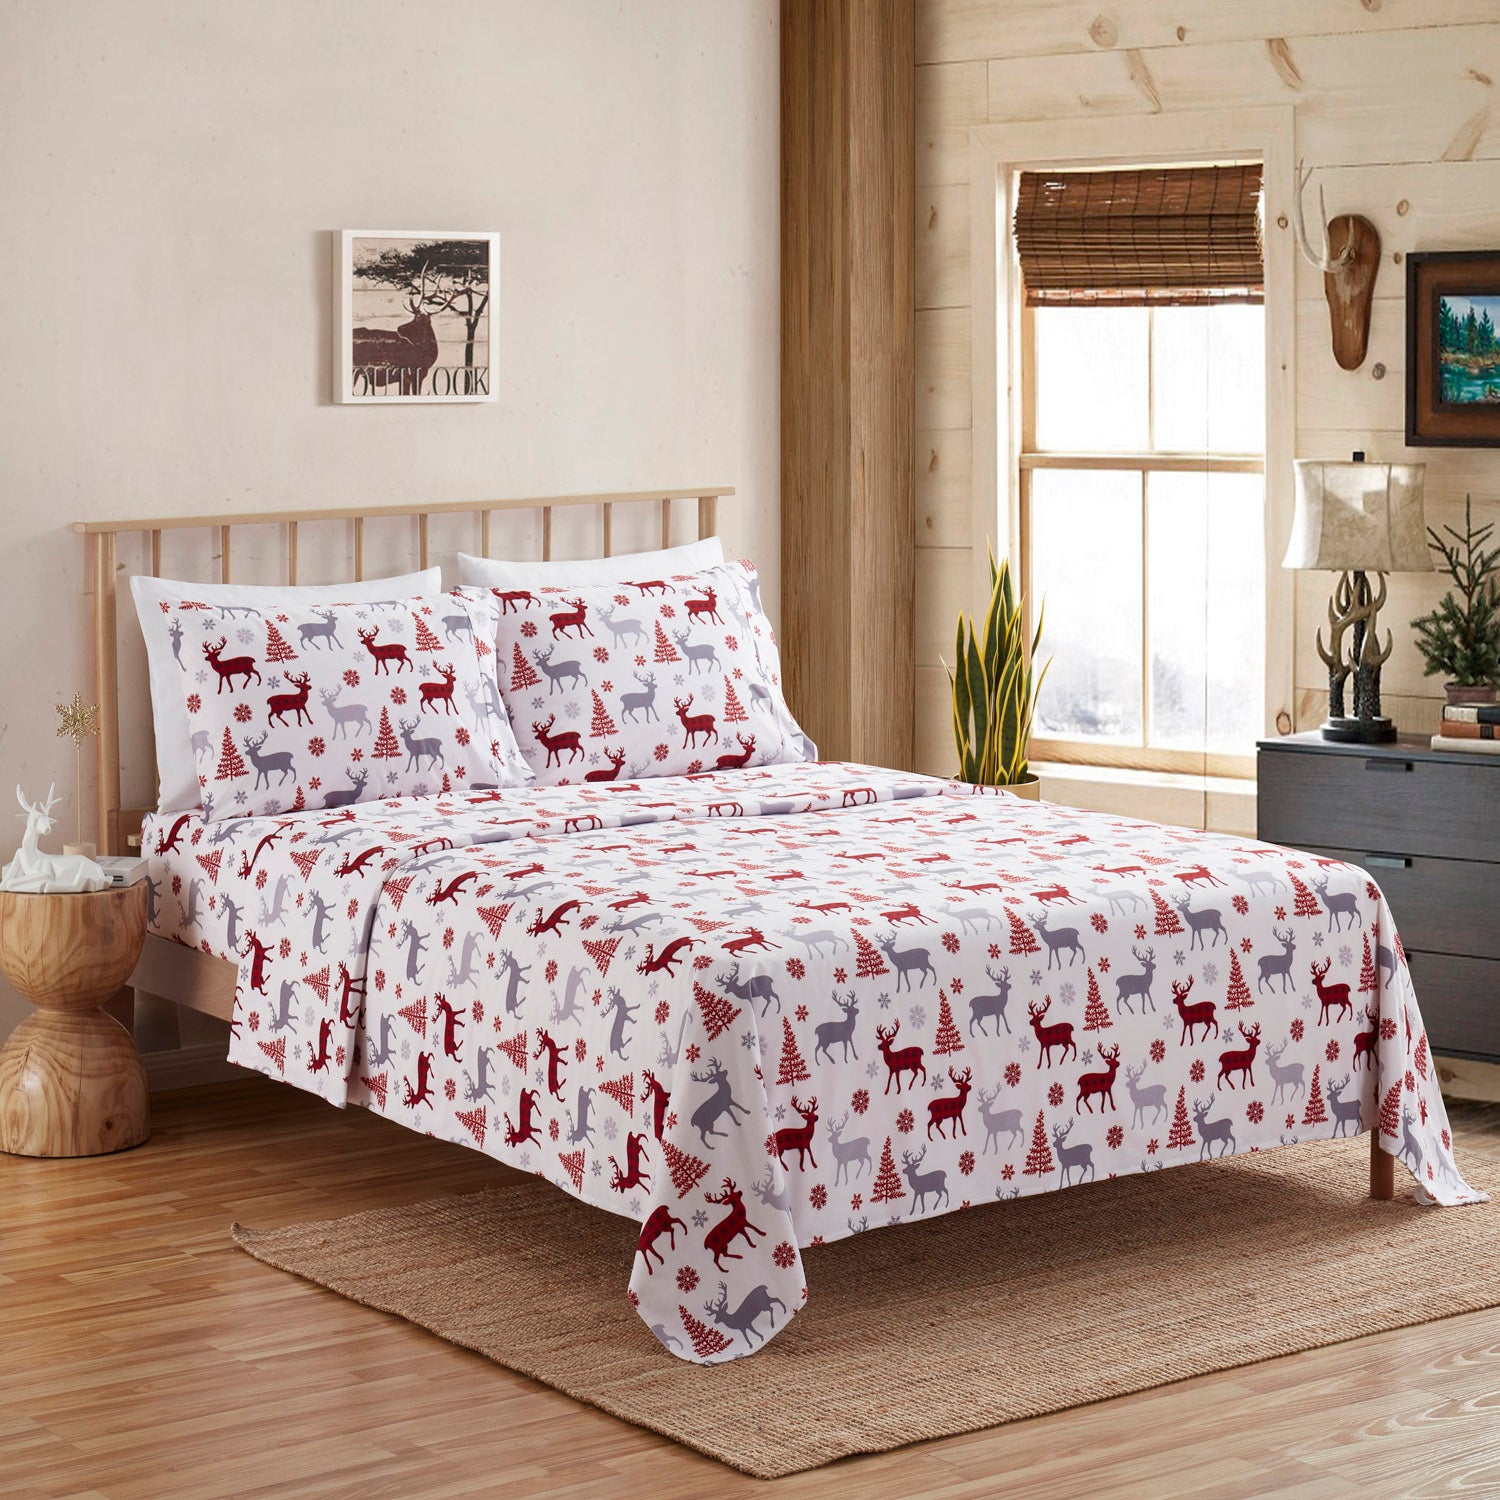 Printed Flannel 4-Piece Sheet Set, Buffalo Deer - Bed